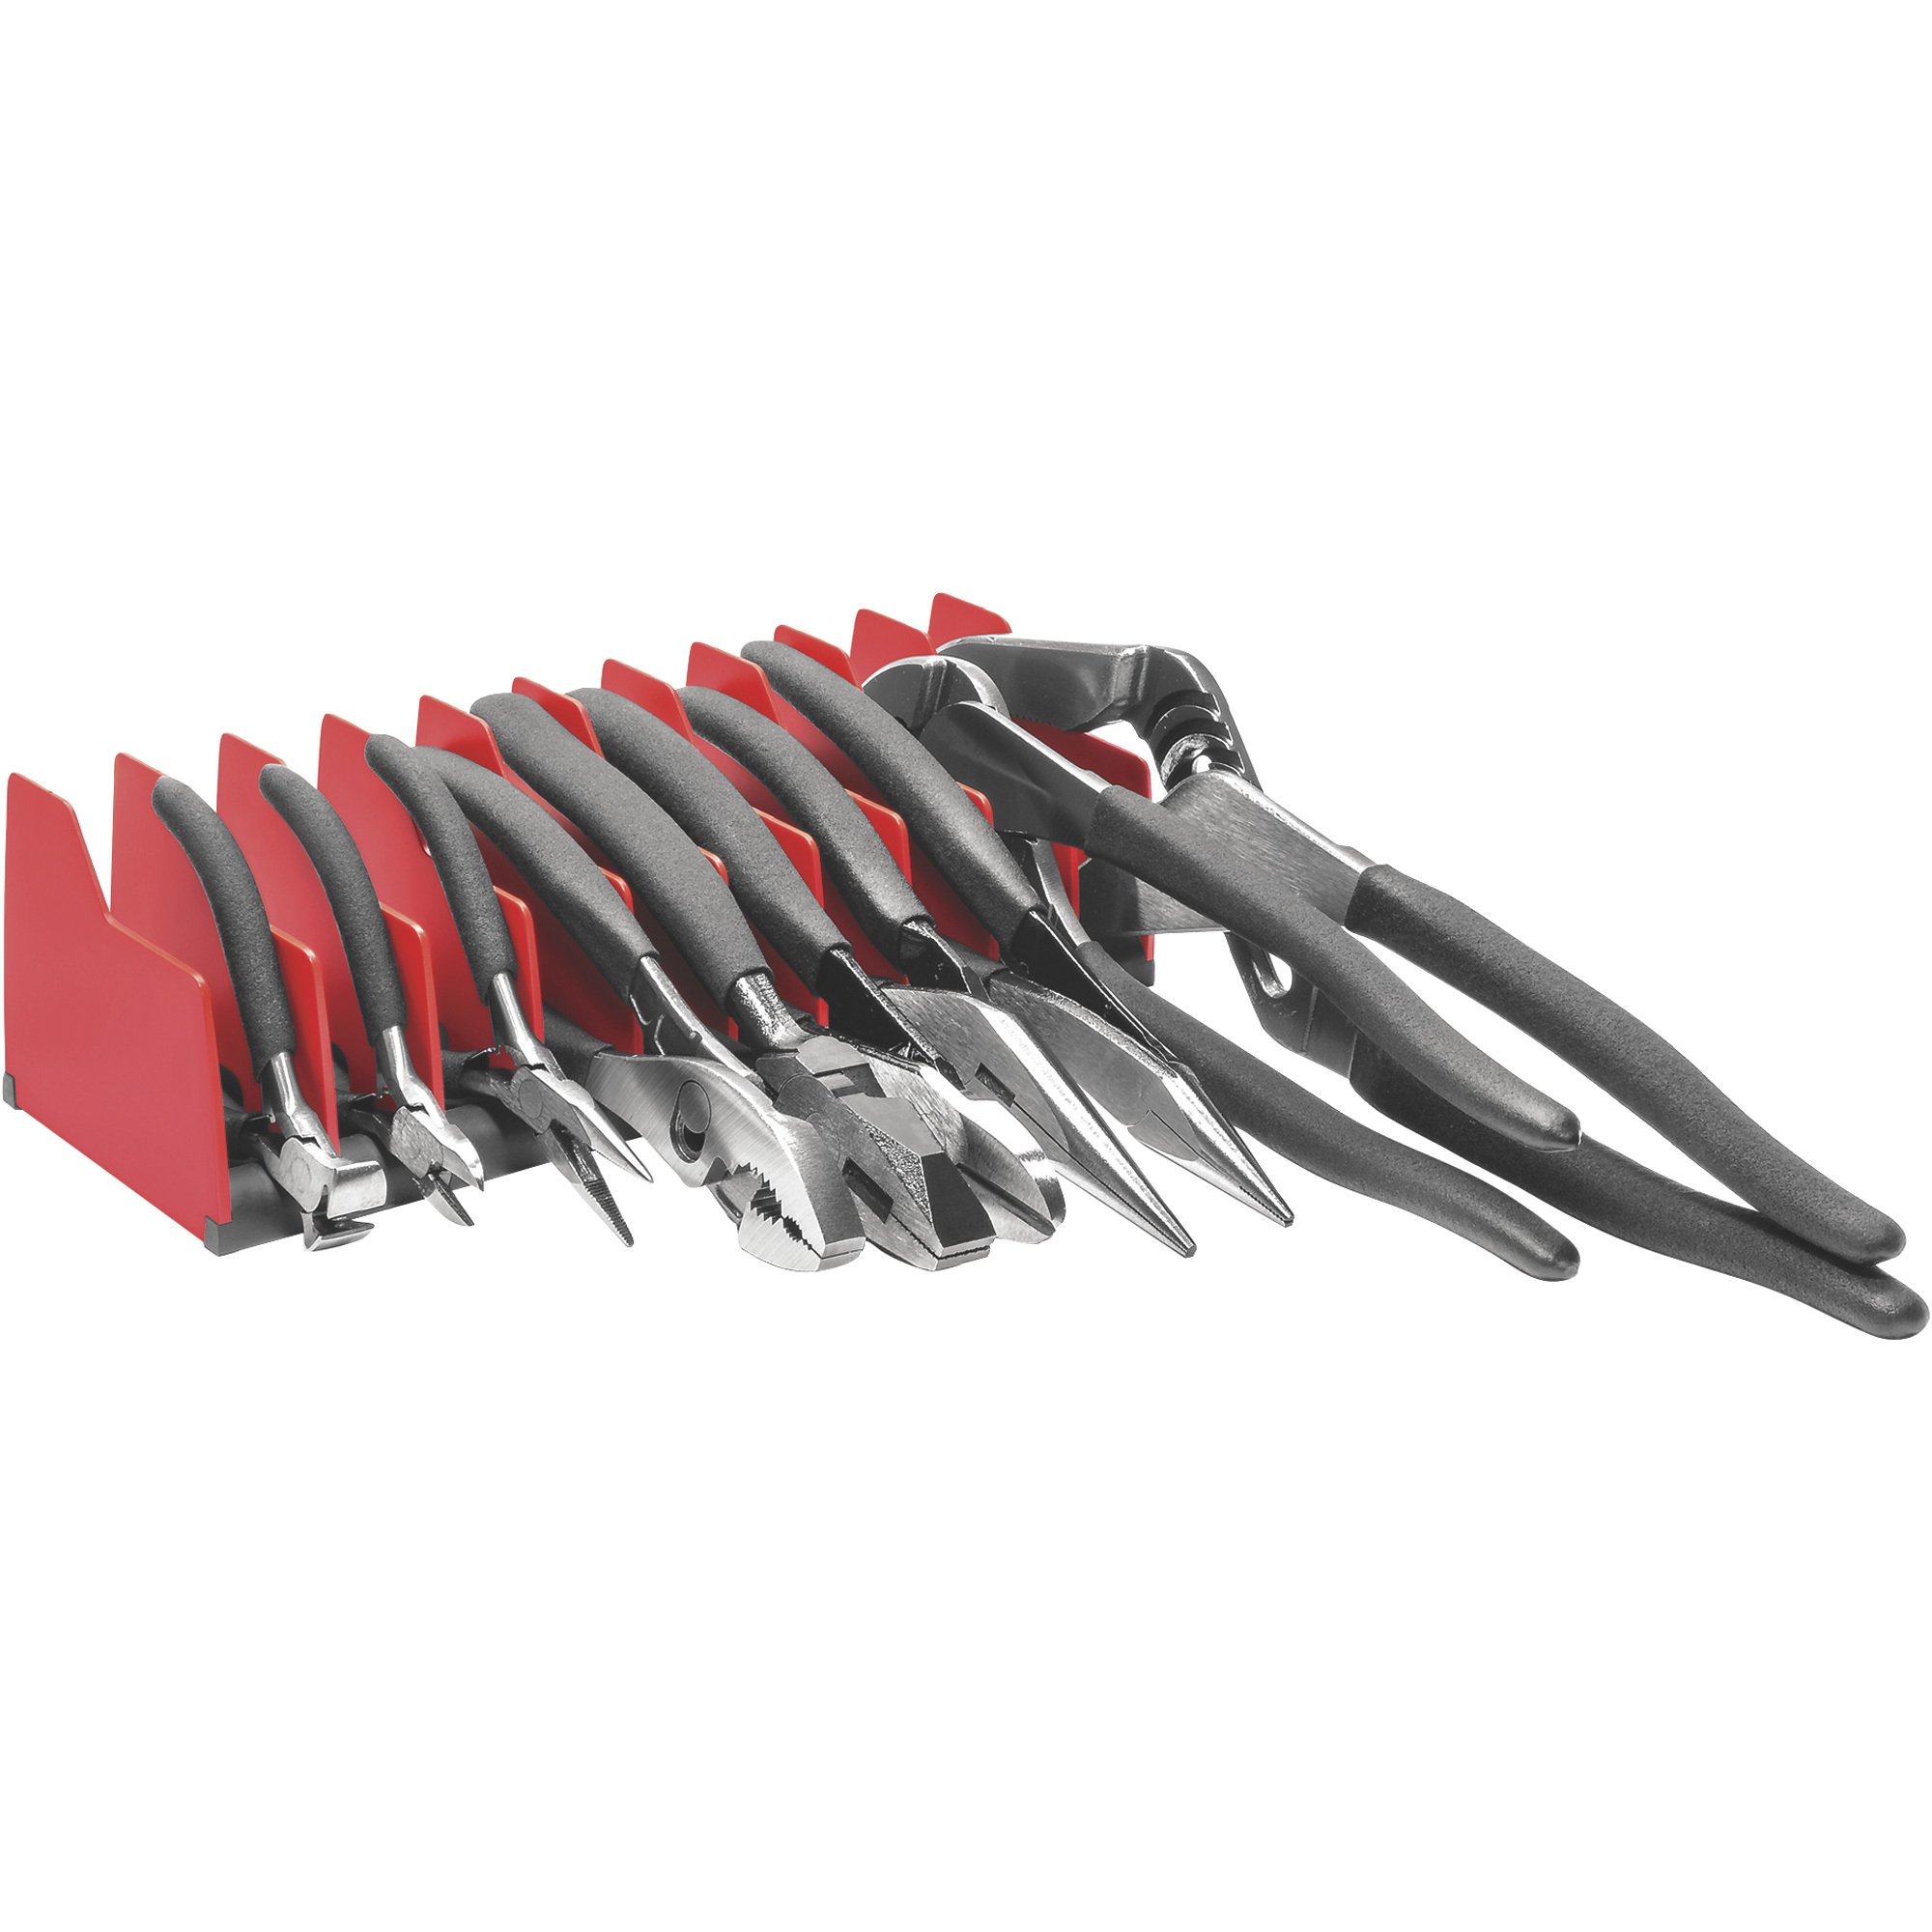 Ernst Manufacturing Plier Organizer — 10-Tool Capacity, Model